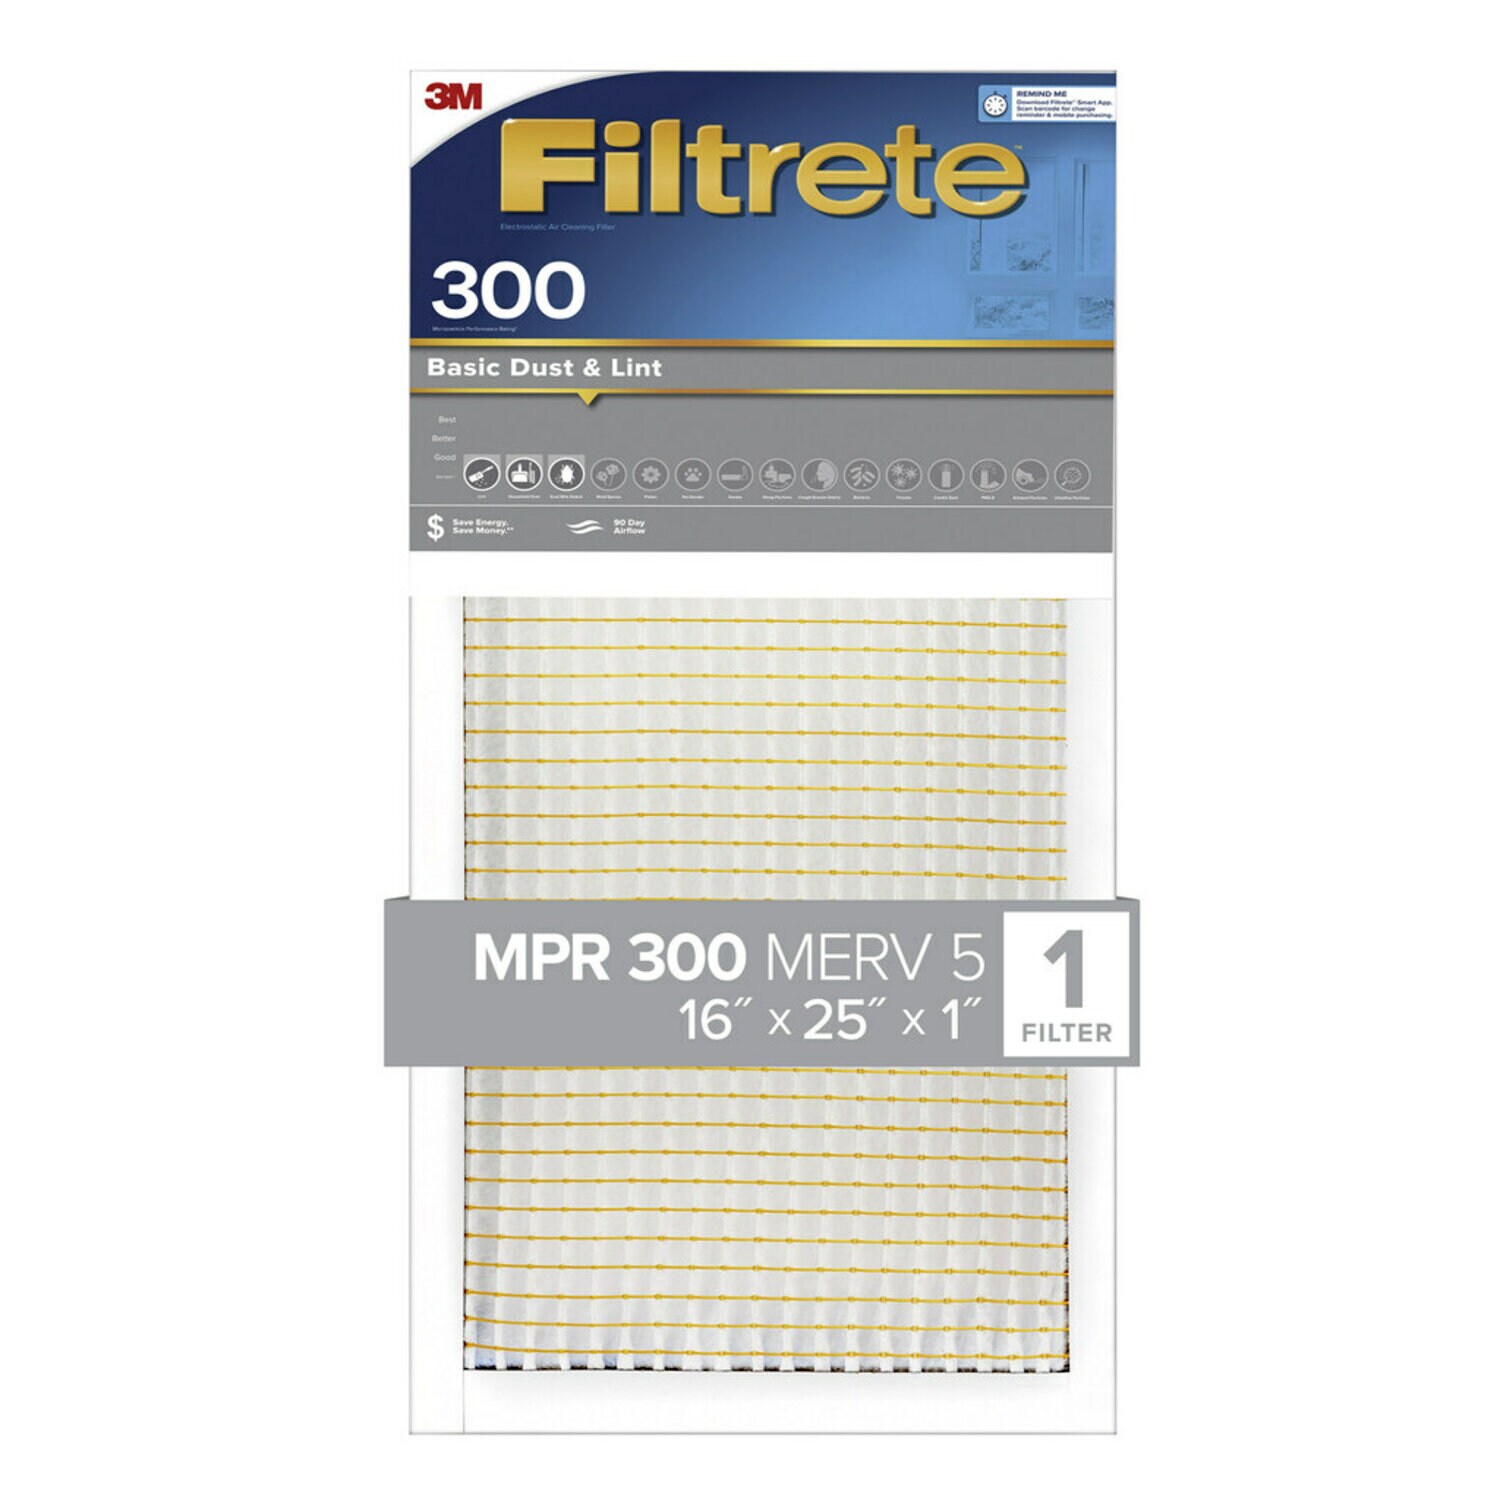 7100184014 - Filtrete Basic Dust & Lint Air Filter, 300 MPR, 301-4, 16 in x 25 in x
1 in (40.6 cm x 63.5 cm x 2.5 cm)